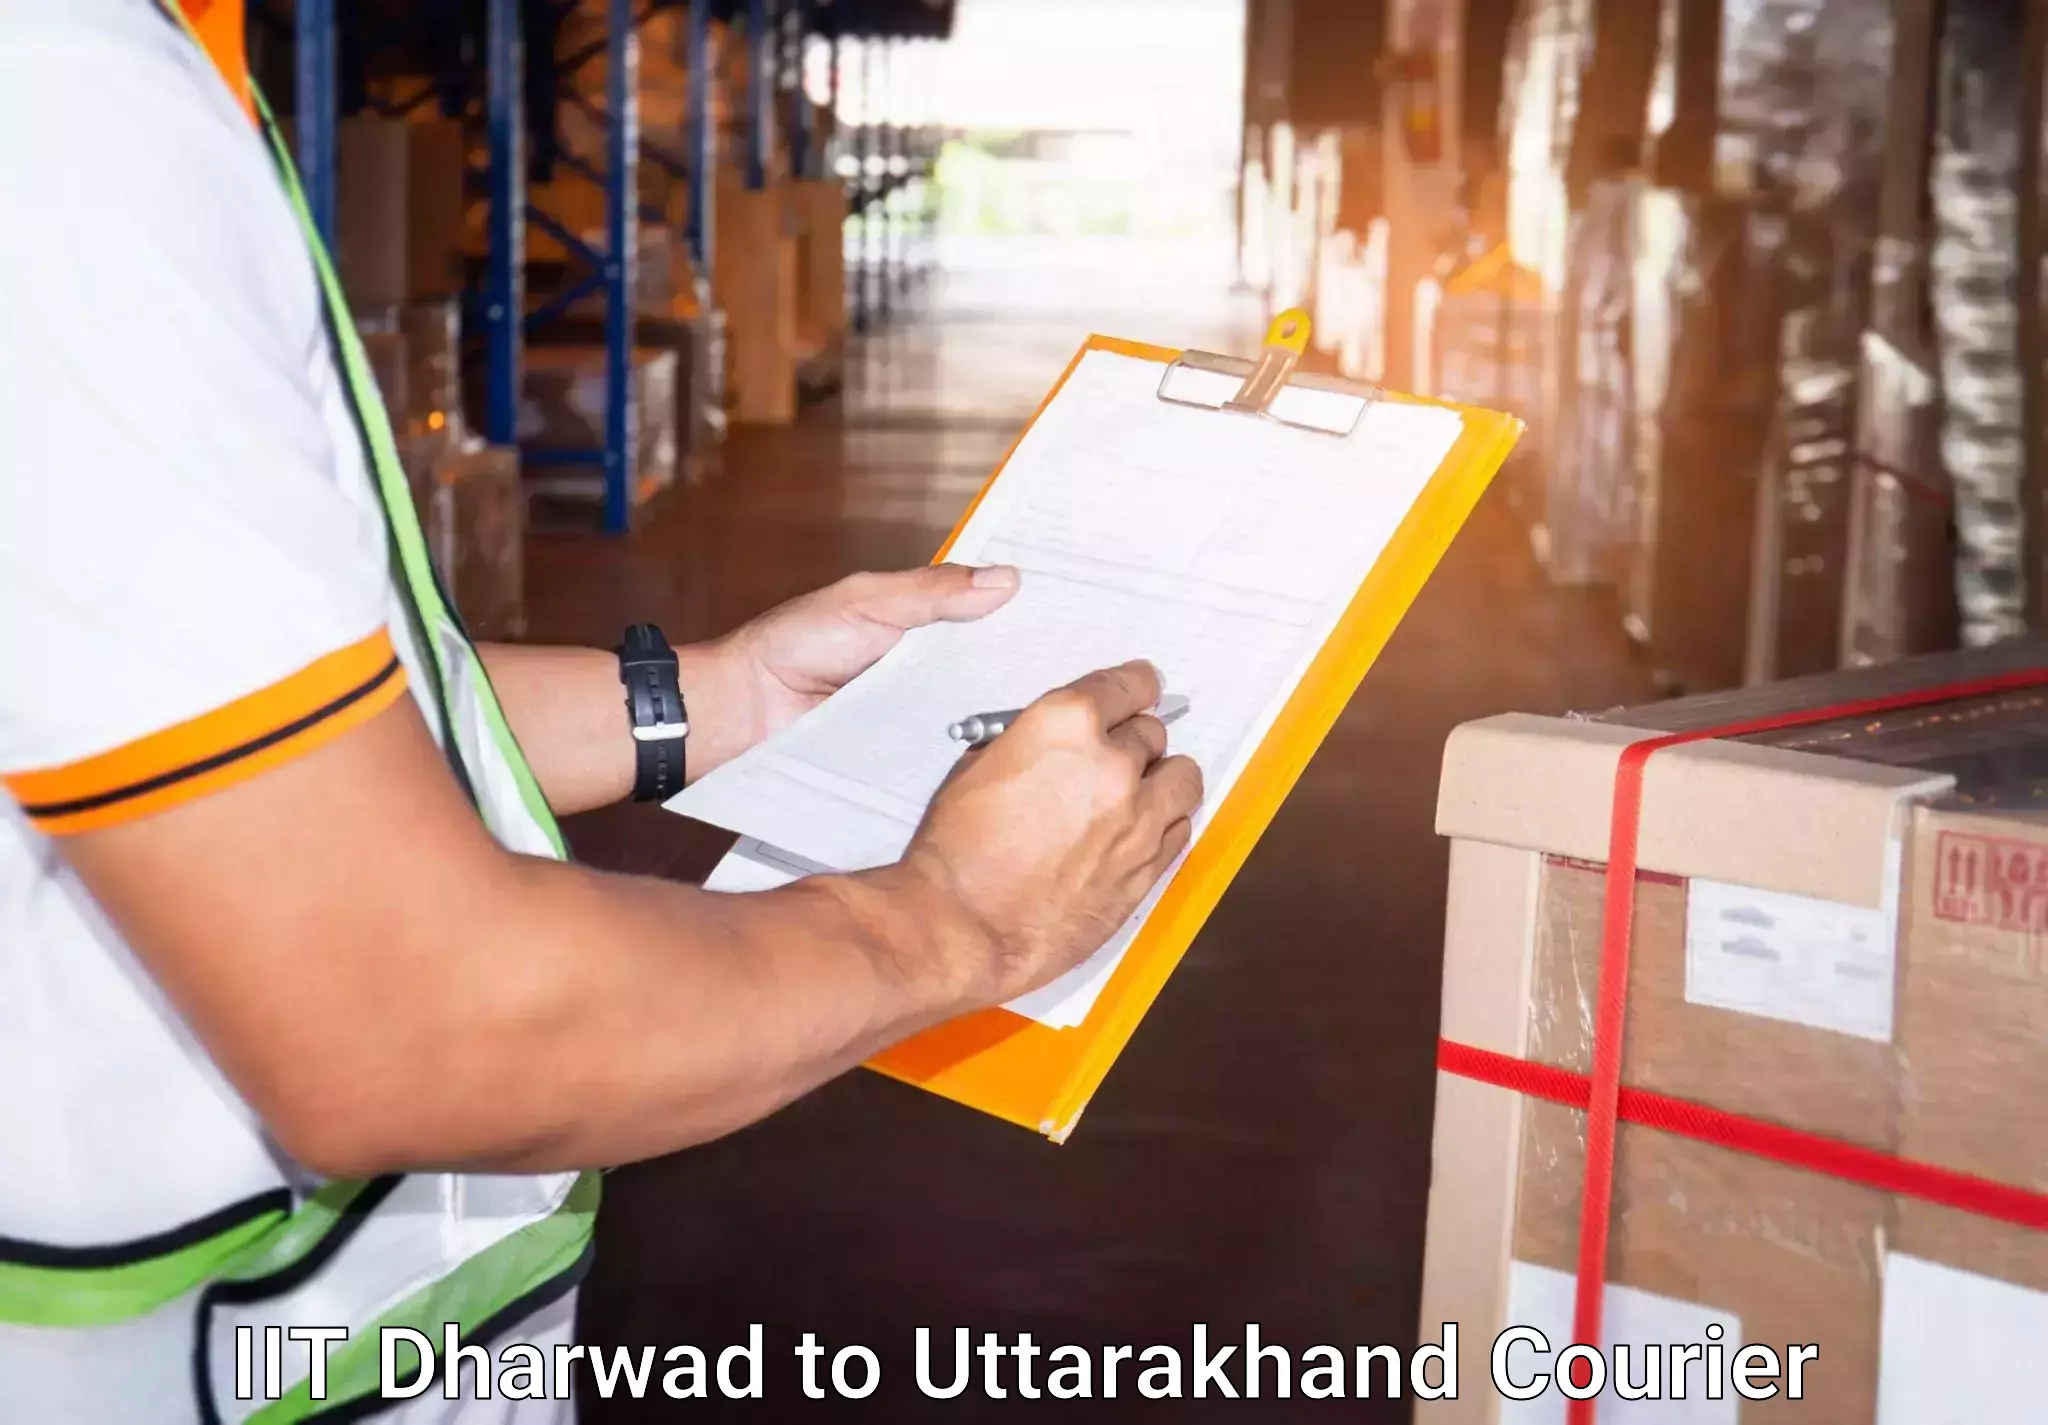 Personal effects shipping IIT Dharwad to Nainital